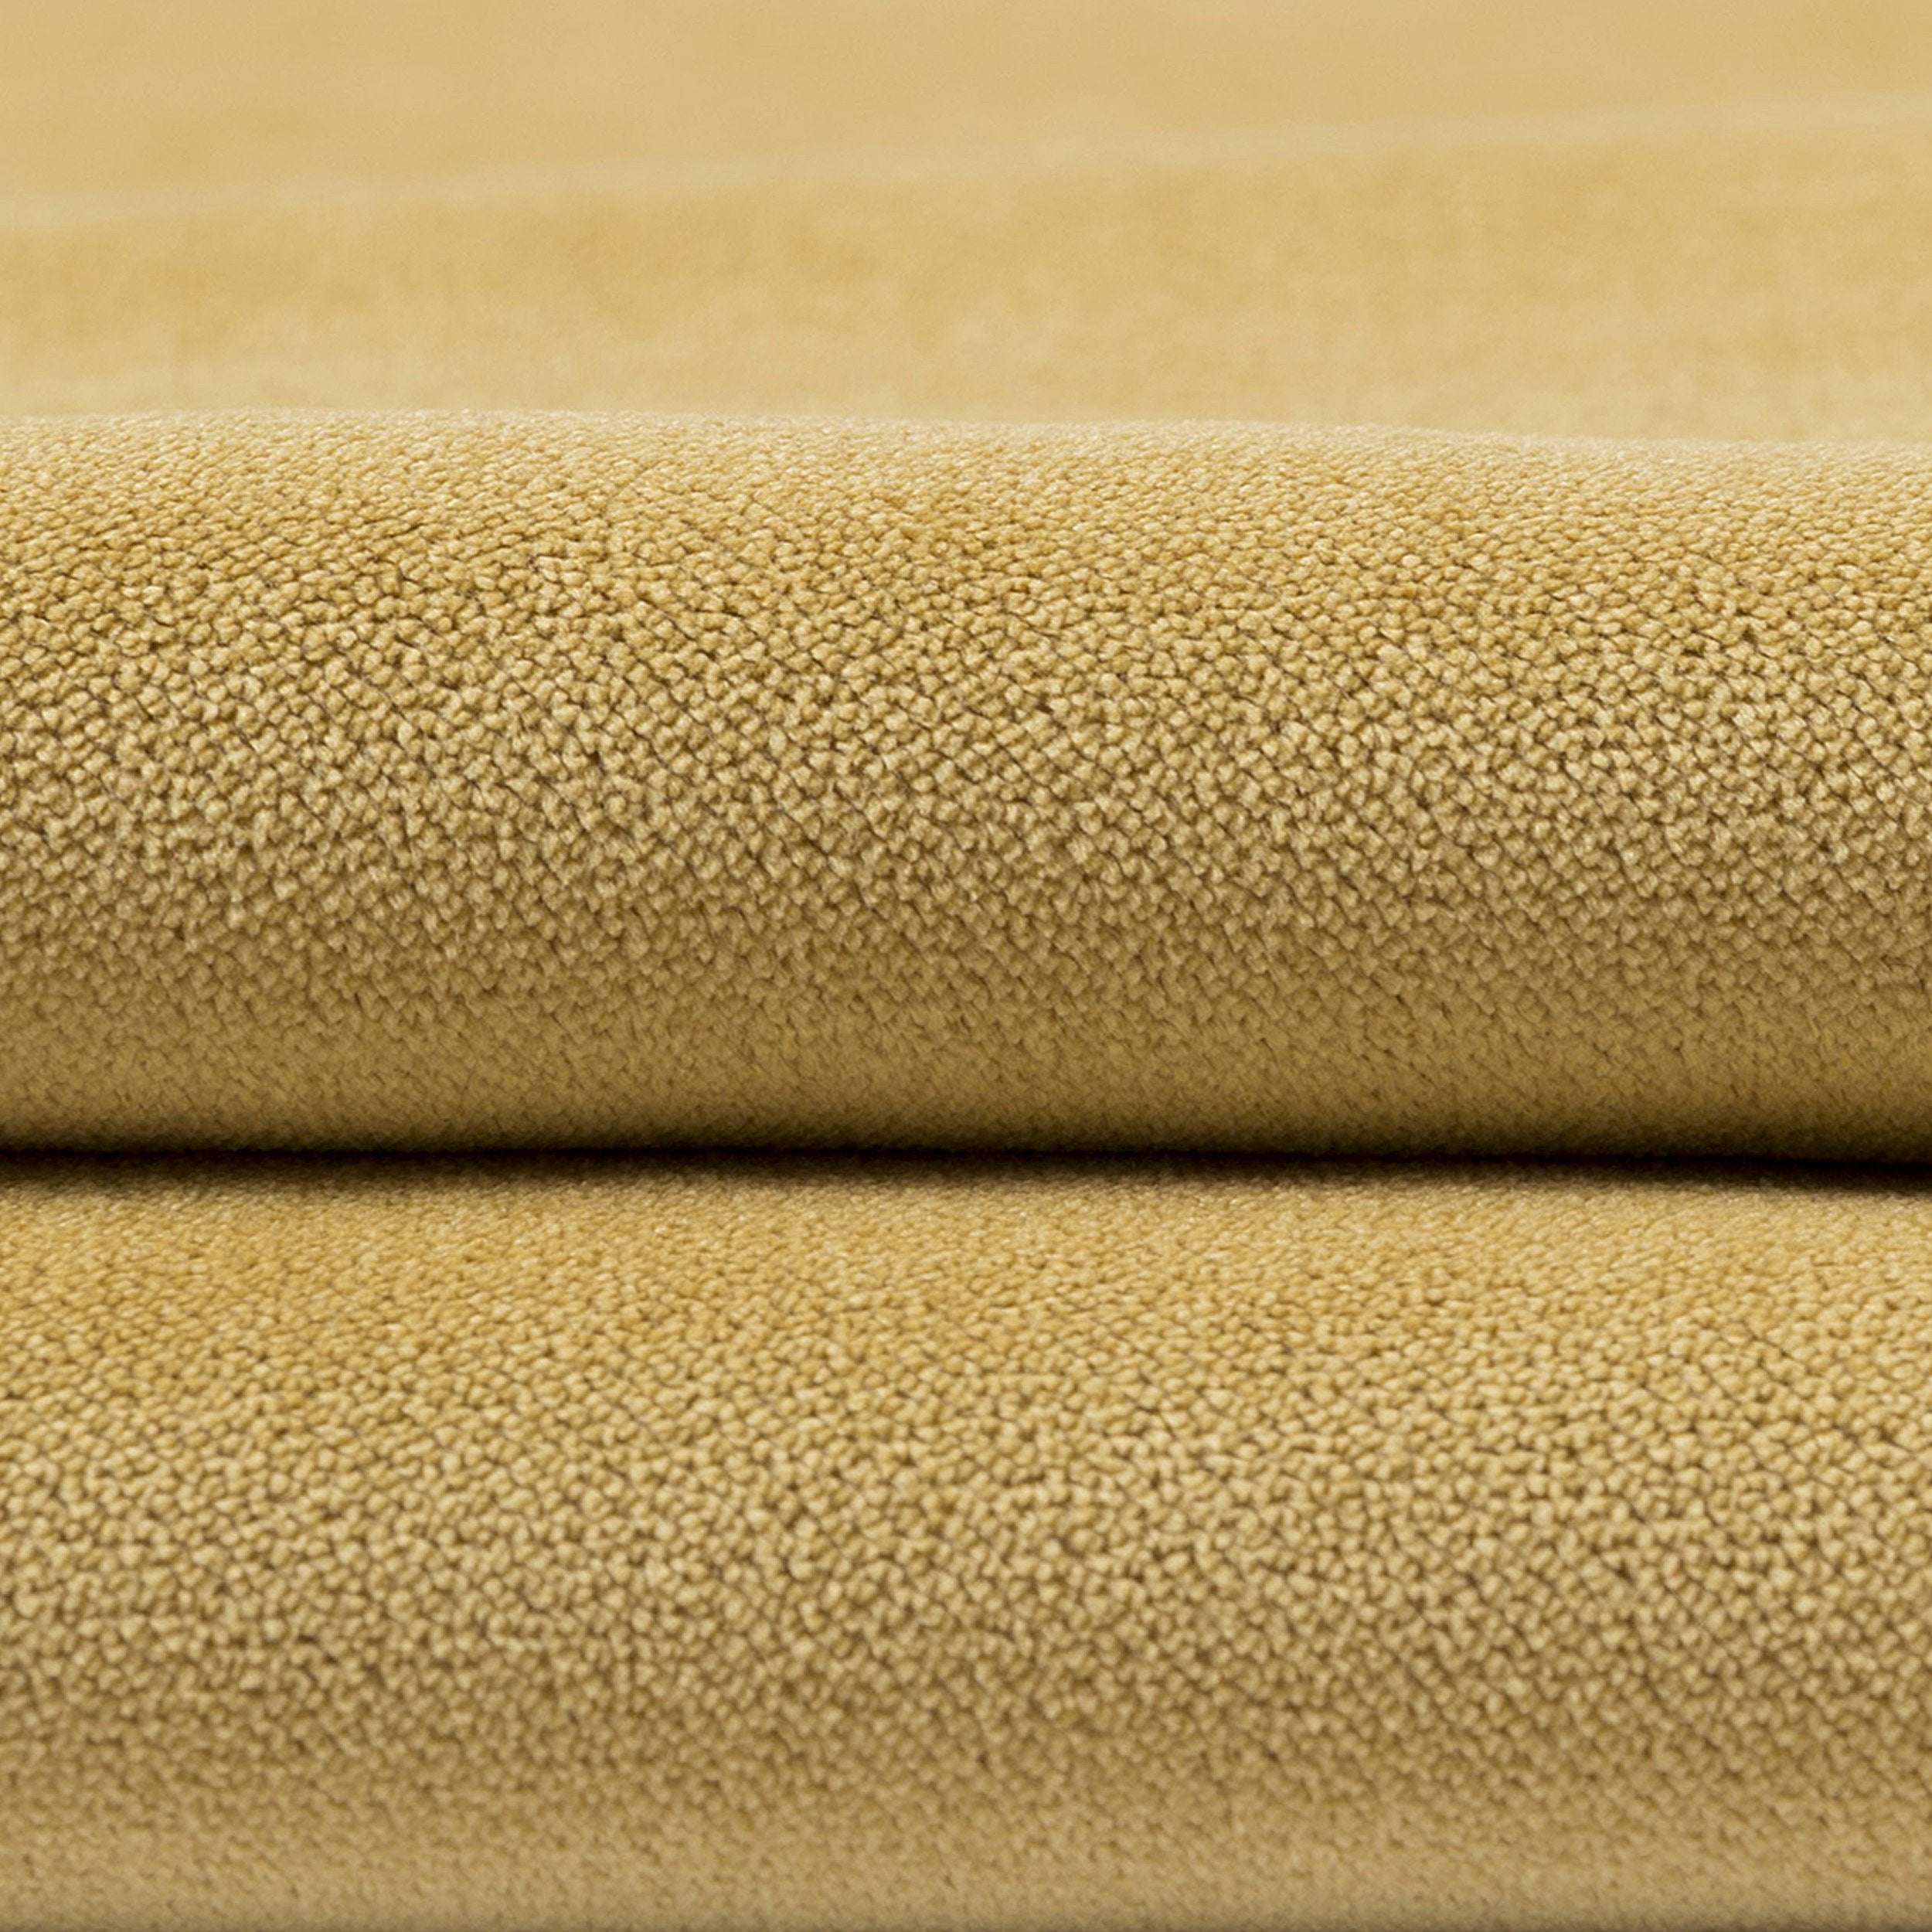 McAlister Textiles Deluxe Velvet Yellow + Grey Box Cushion 50cm x 50cm x 5cm Box Cushions 